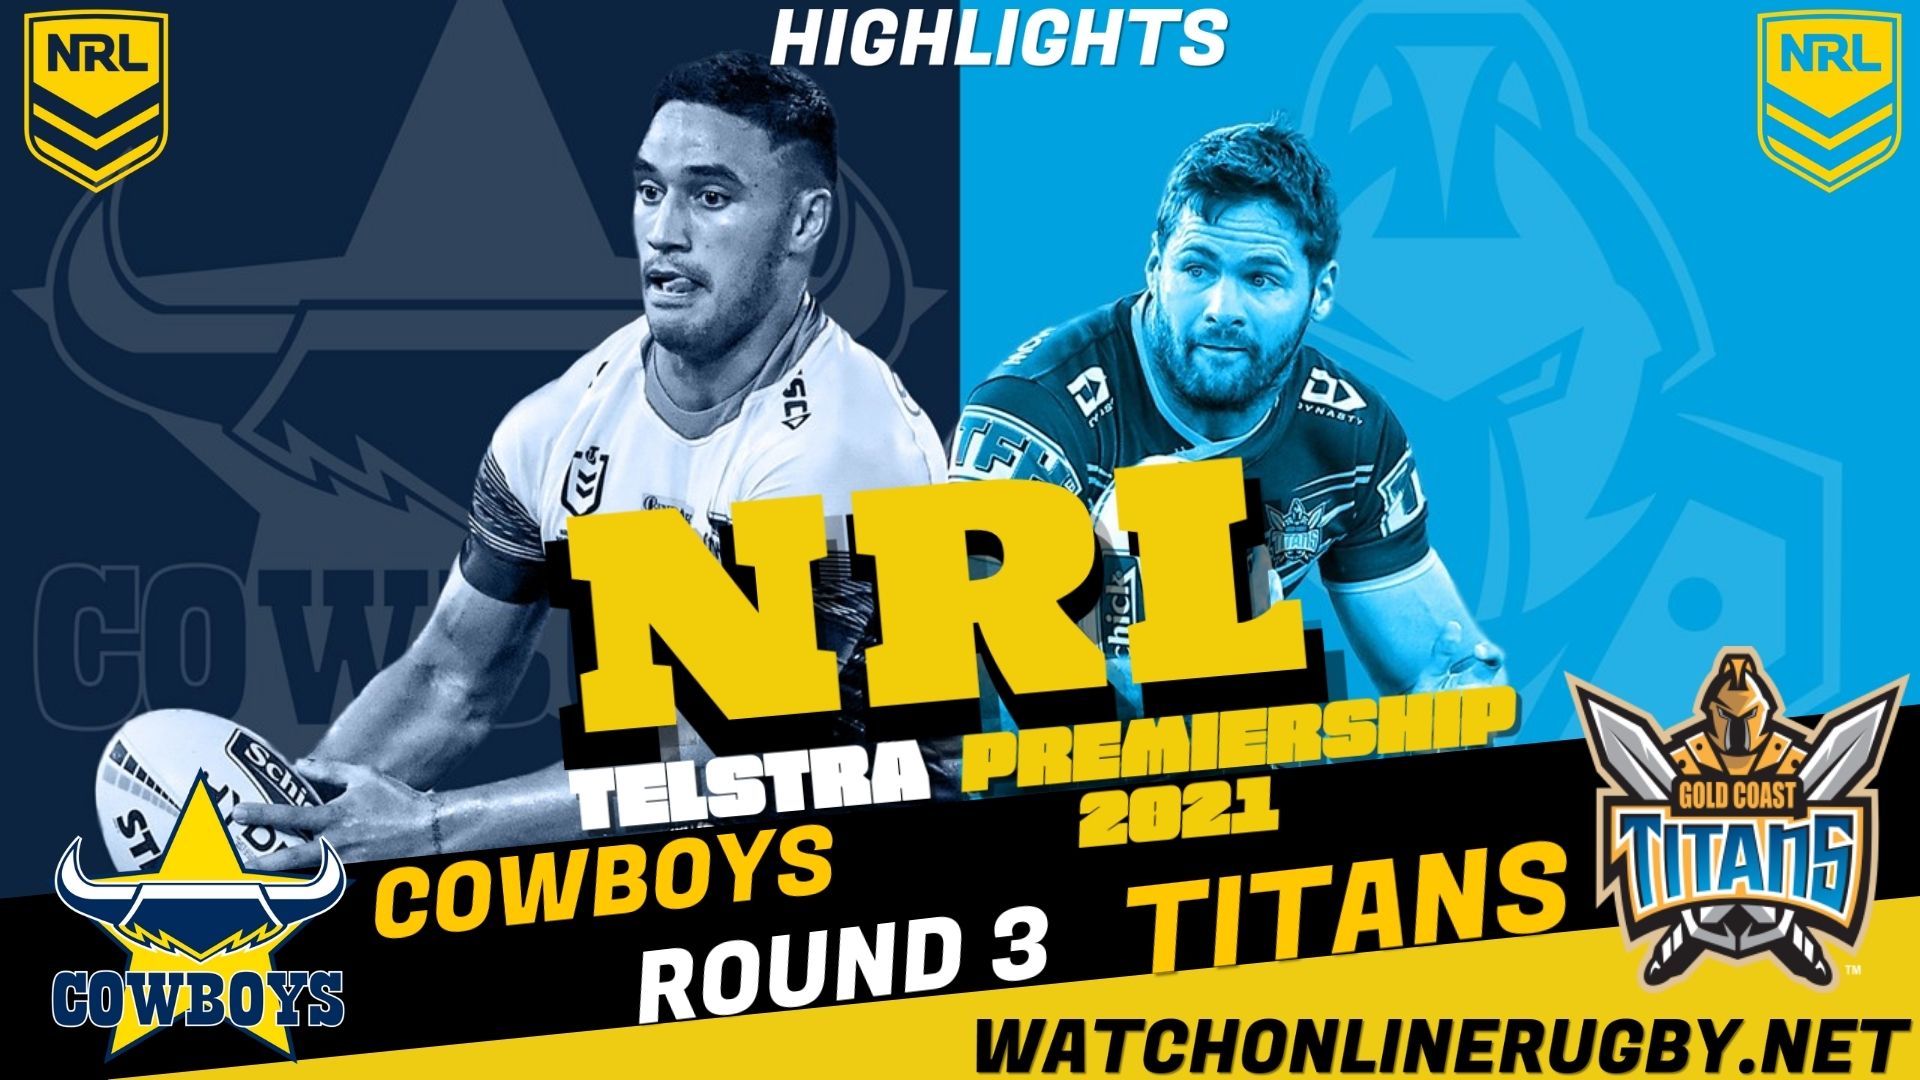 Cowboys Vs Titans Highlights RD 3 NRL Rugby